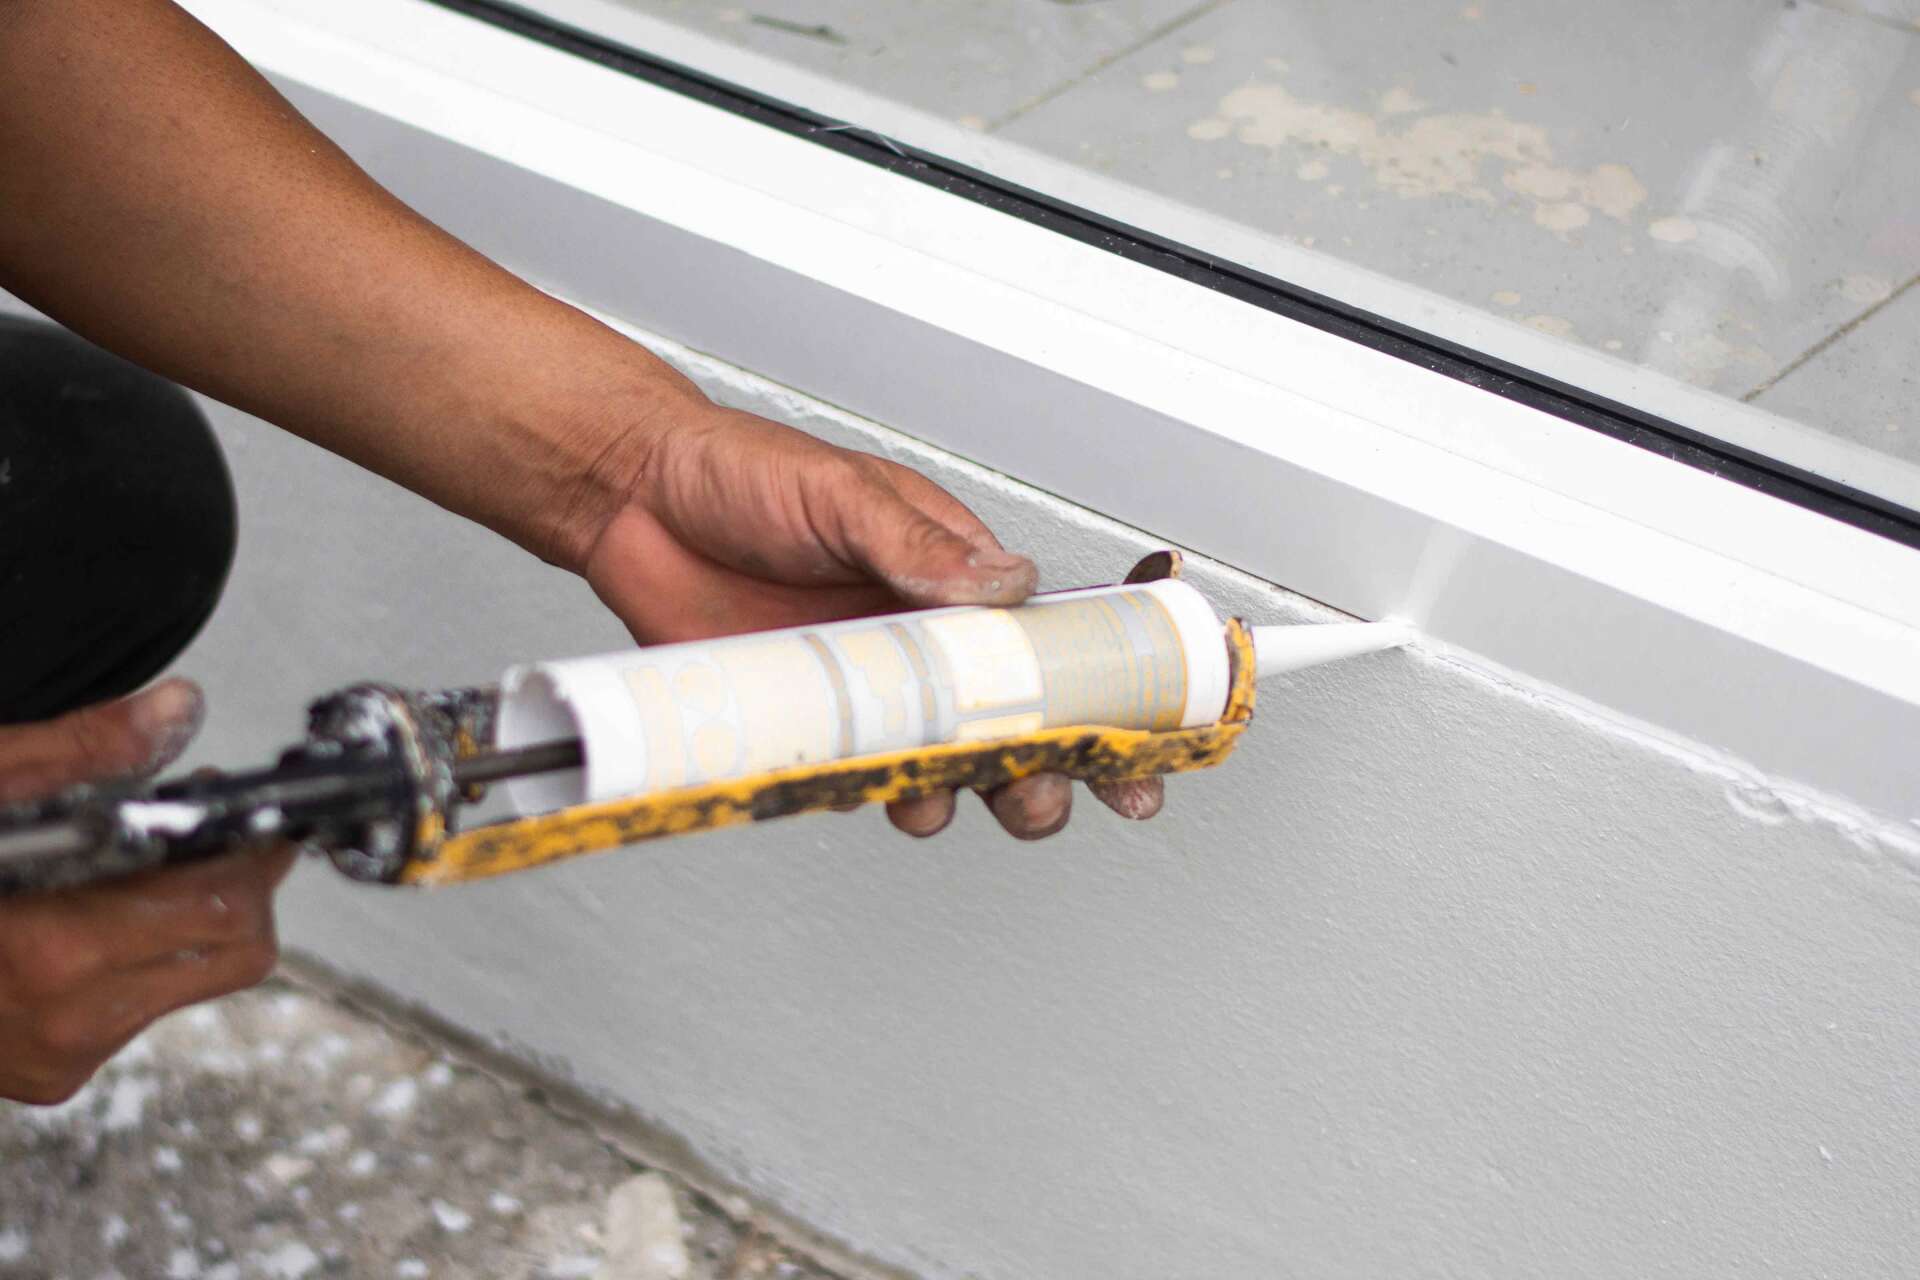 Repairman Hand Installing The Windows With Gun Silicone - Warren, MI - Maple Lane Pest Control